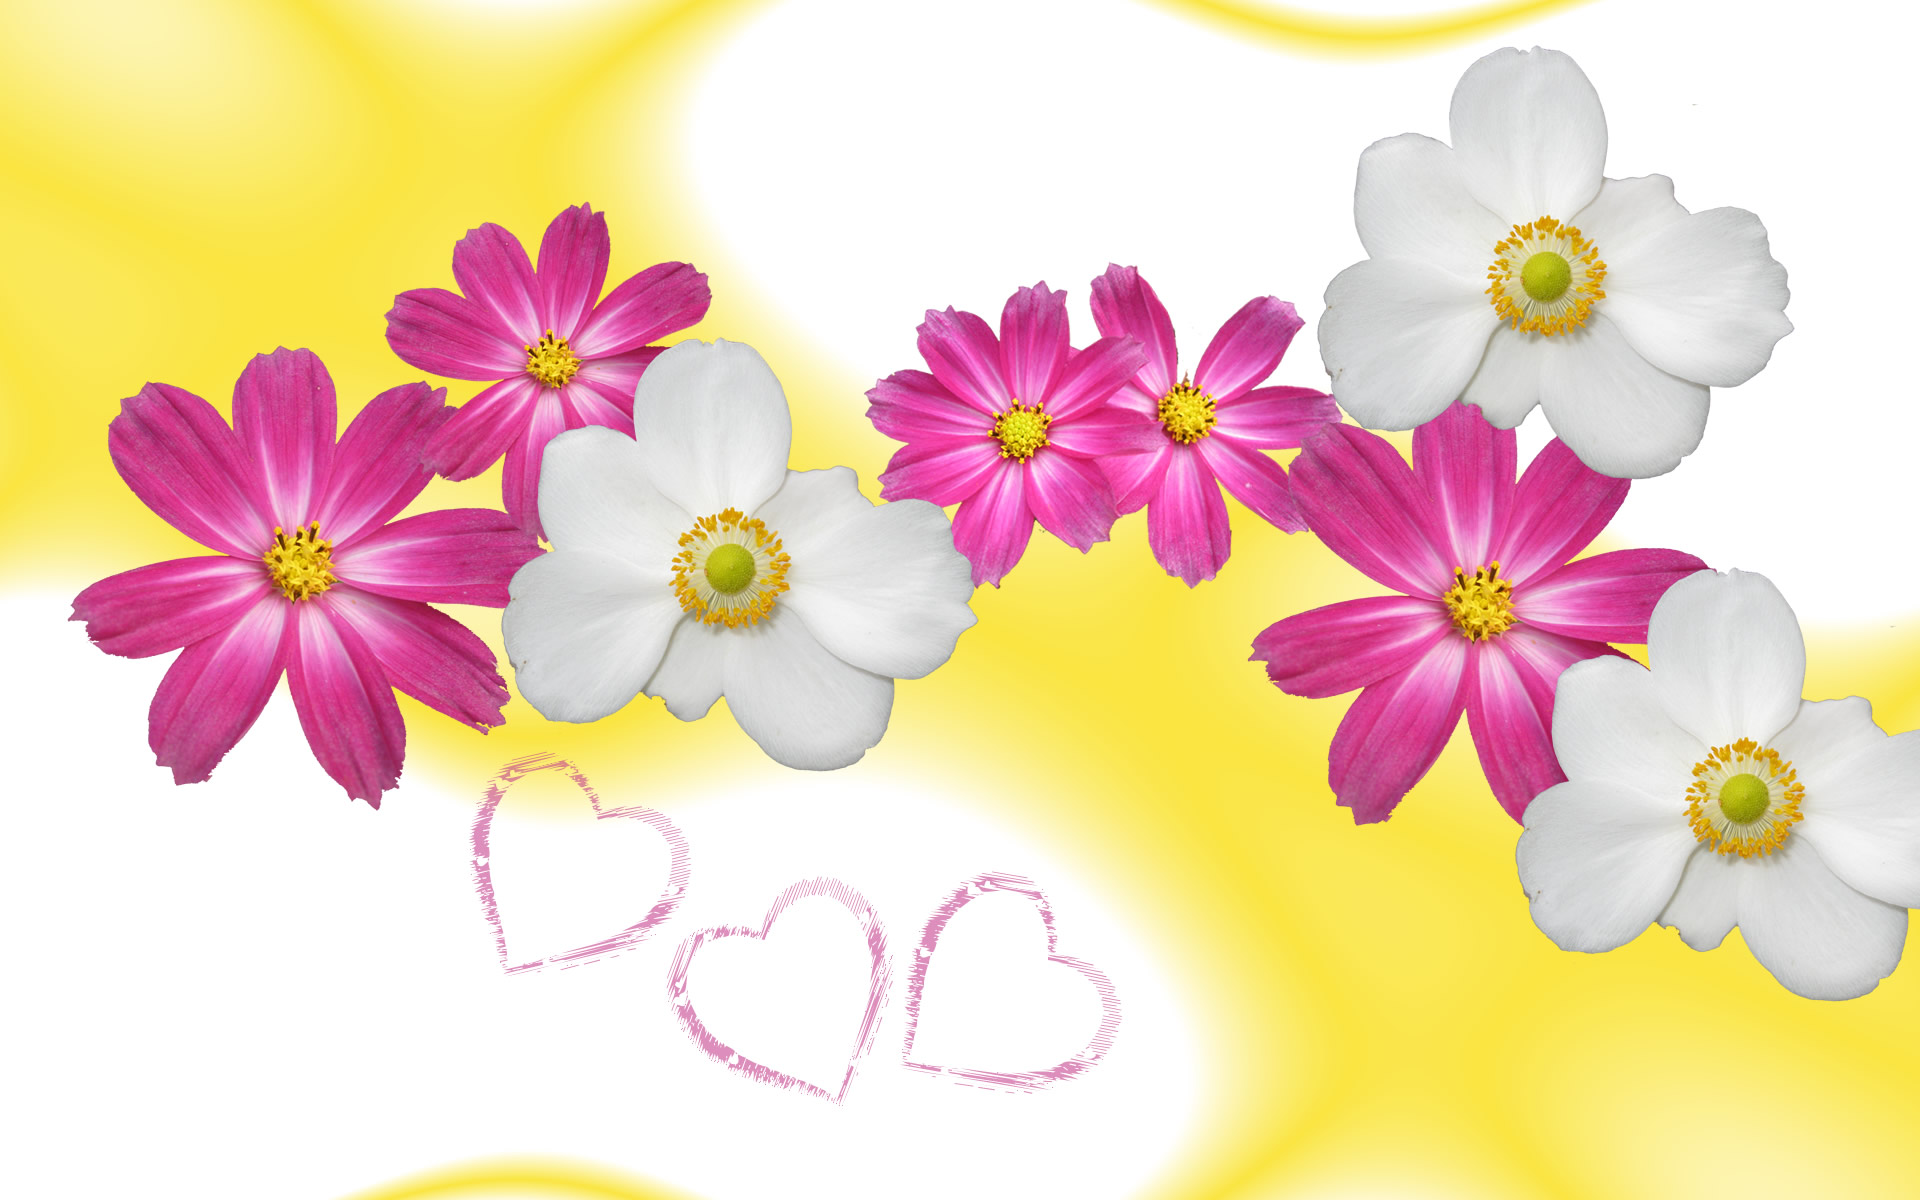 Free Holiday Desktop Wallpaper Of Flowers